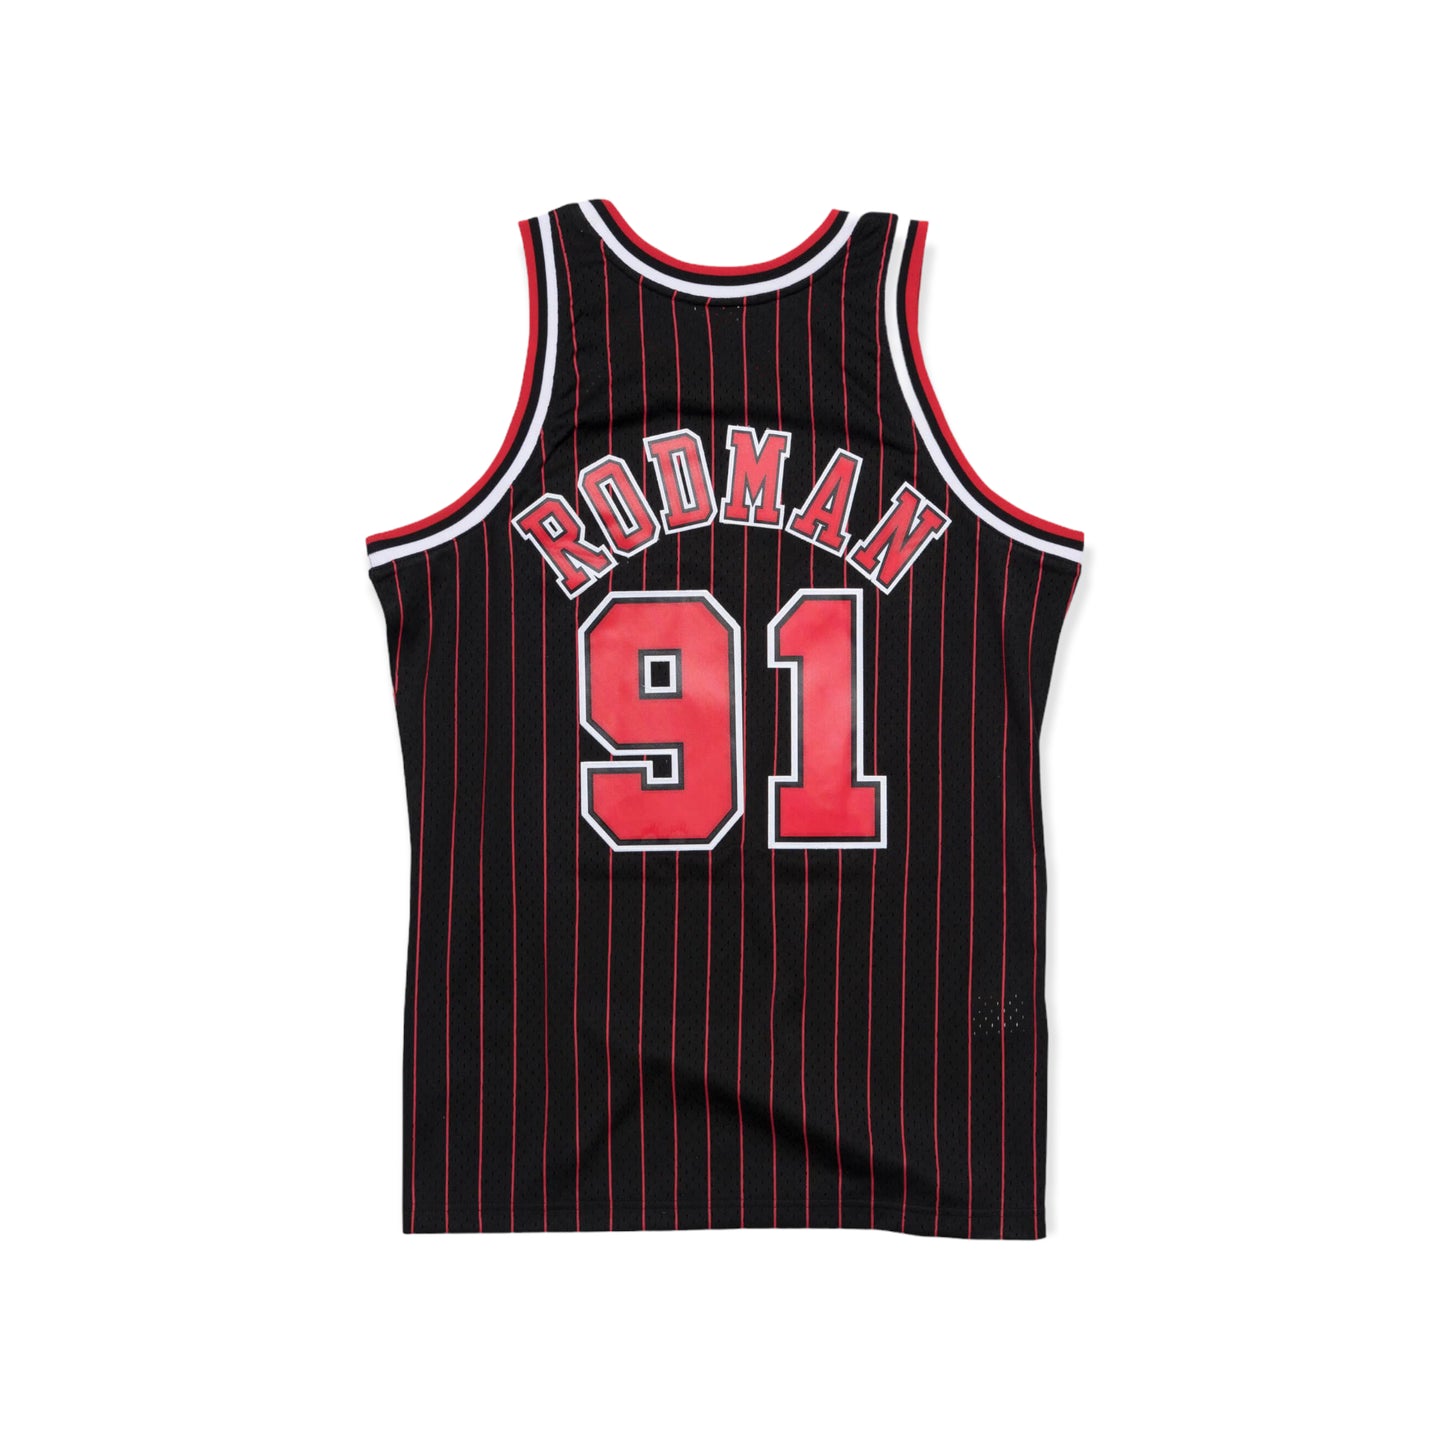 MITCHELL & NESS: Dennis Rodman Alternate 95 Jersey